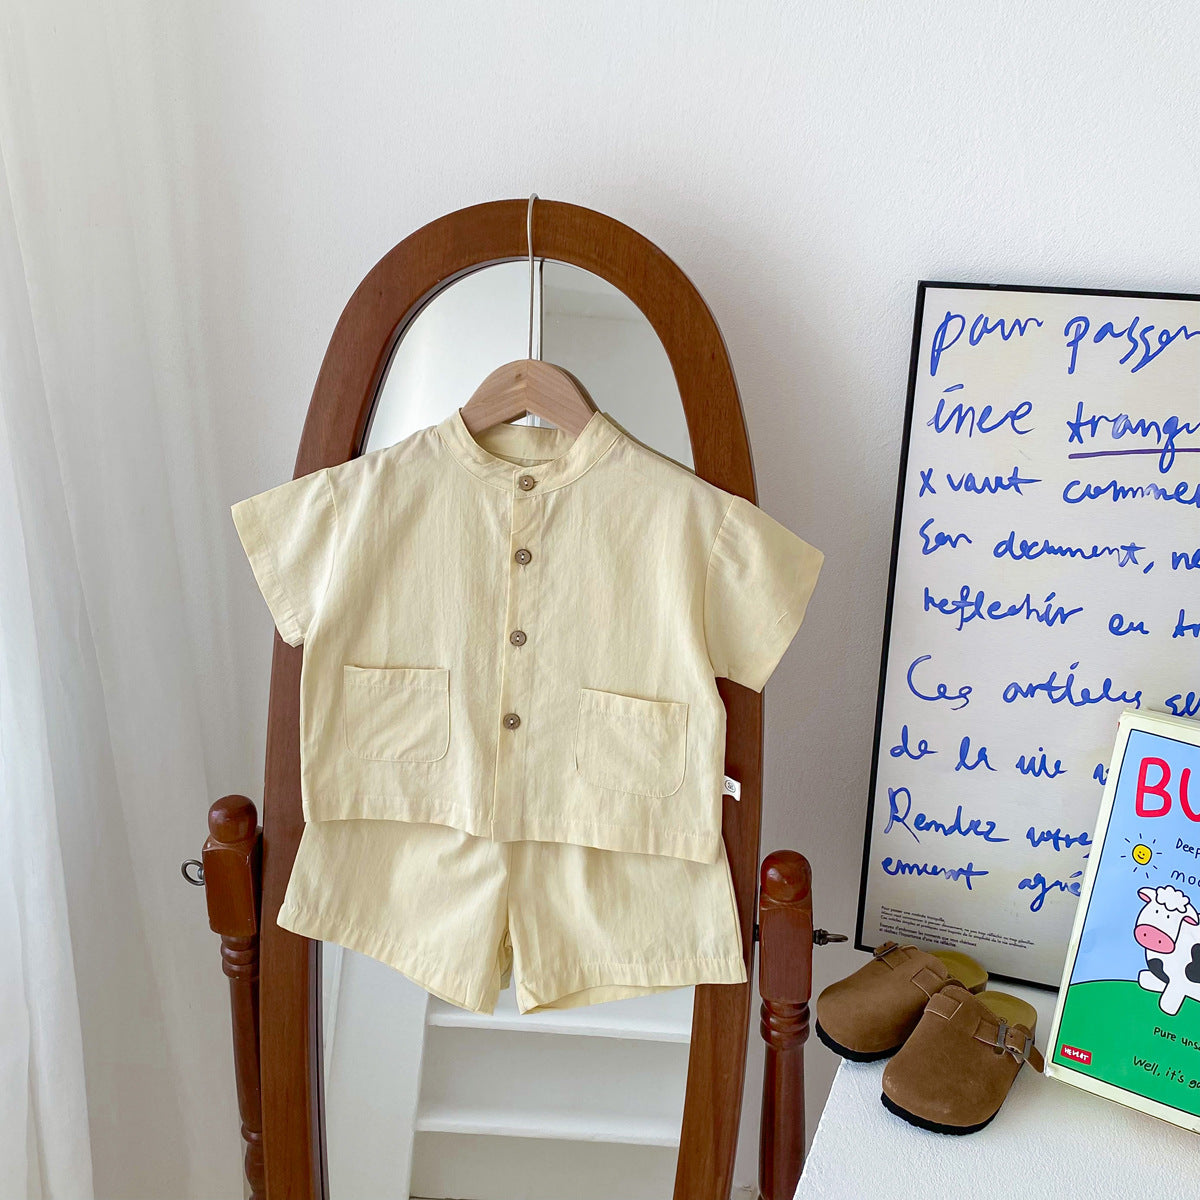 Baby Kids Boys Plaid/Solid Short Sleeves Top Shirt And Shorts Casual Clothing Set